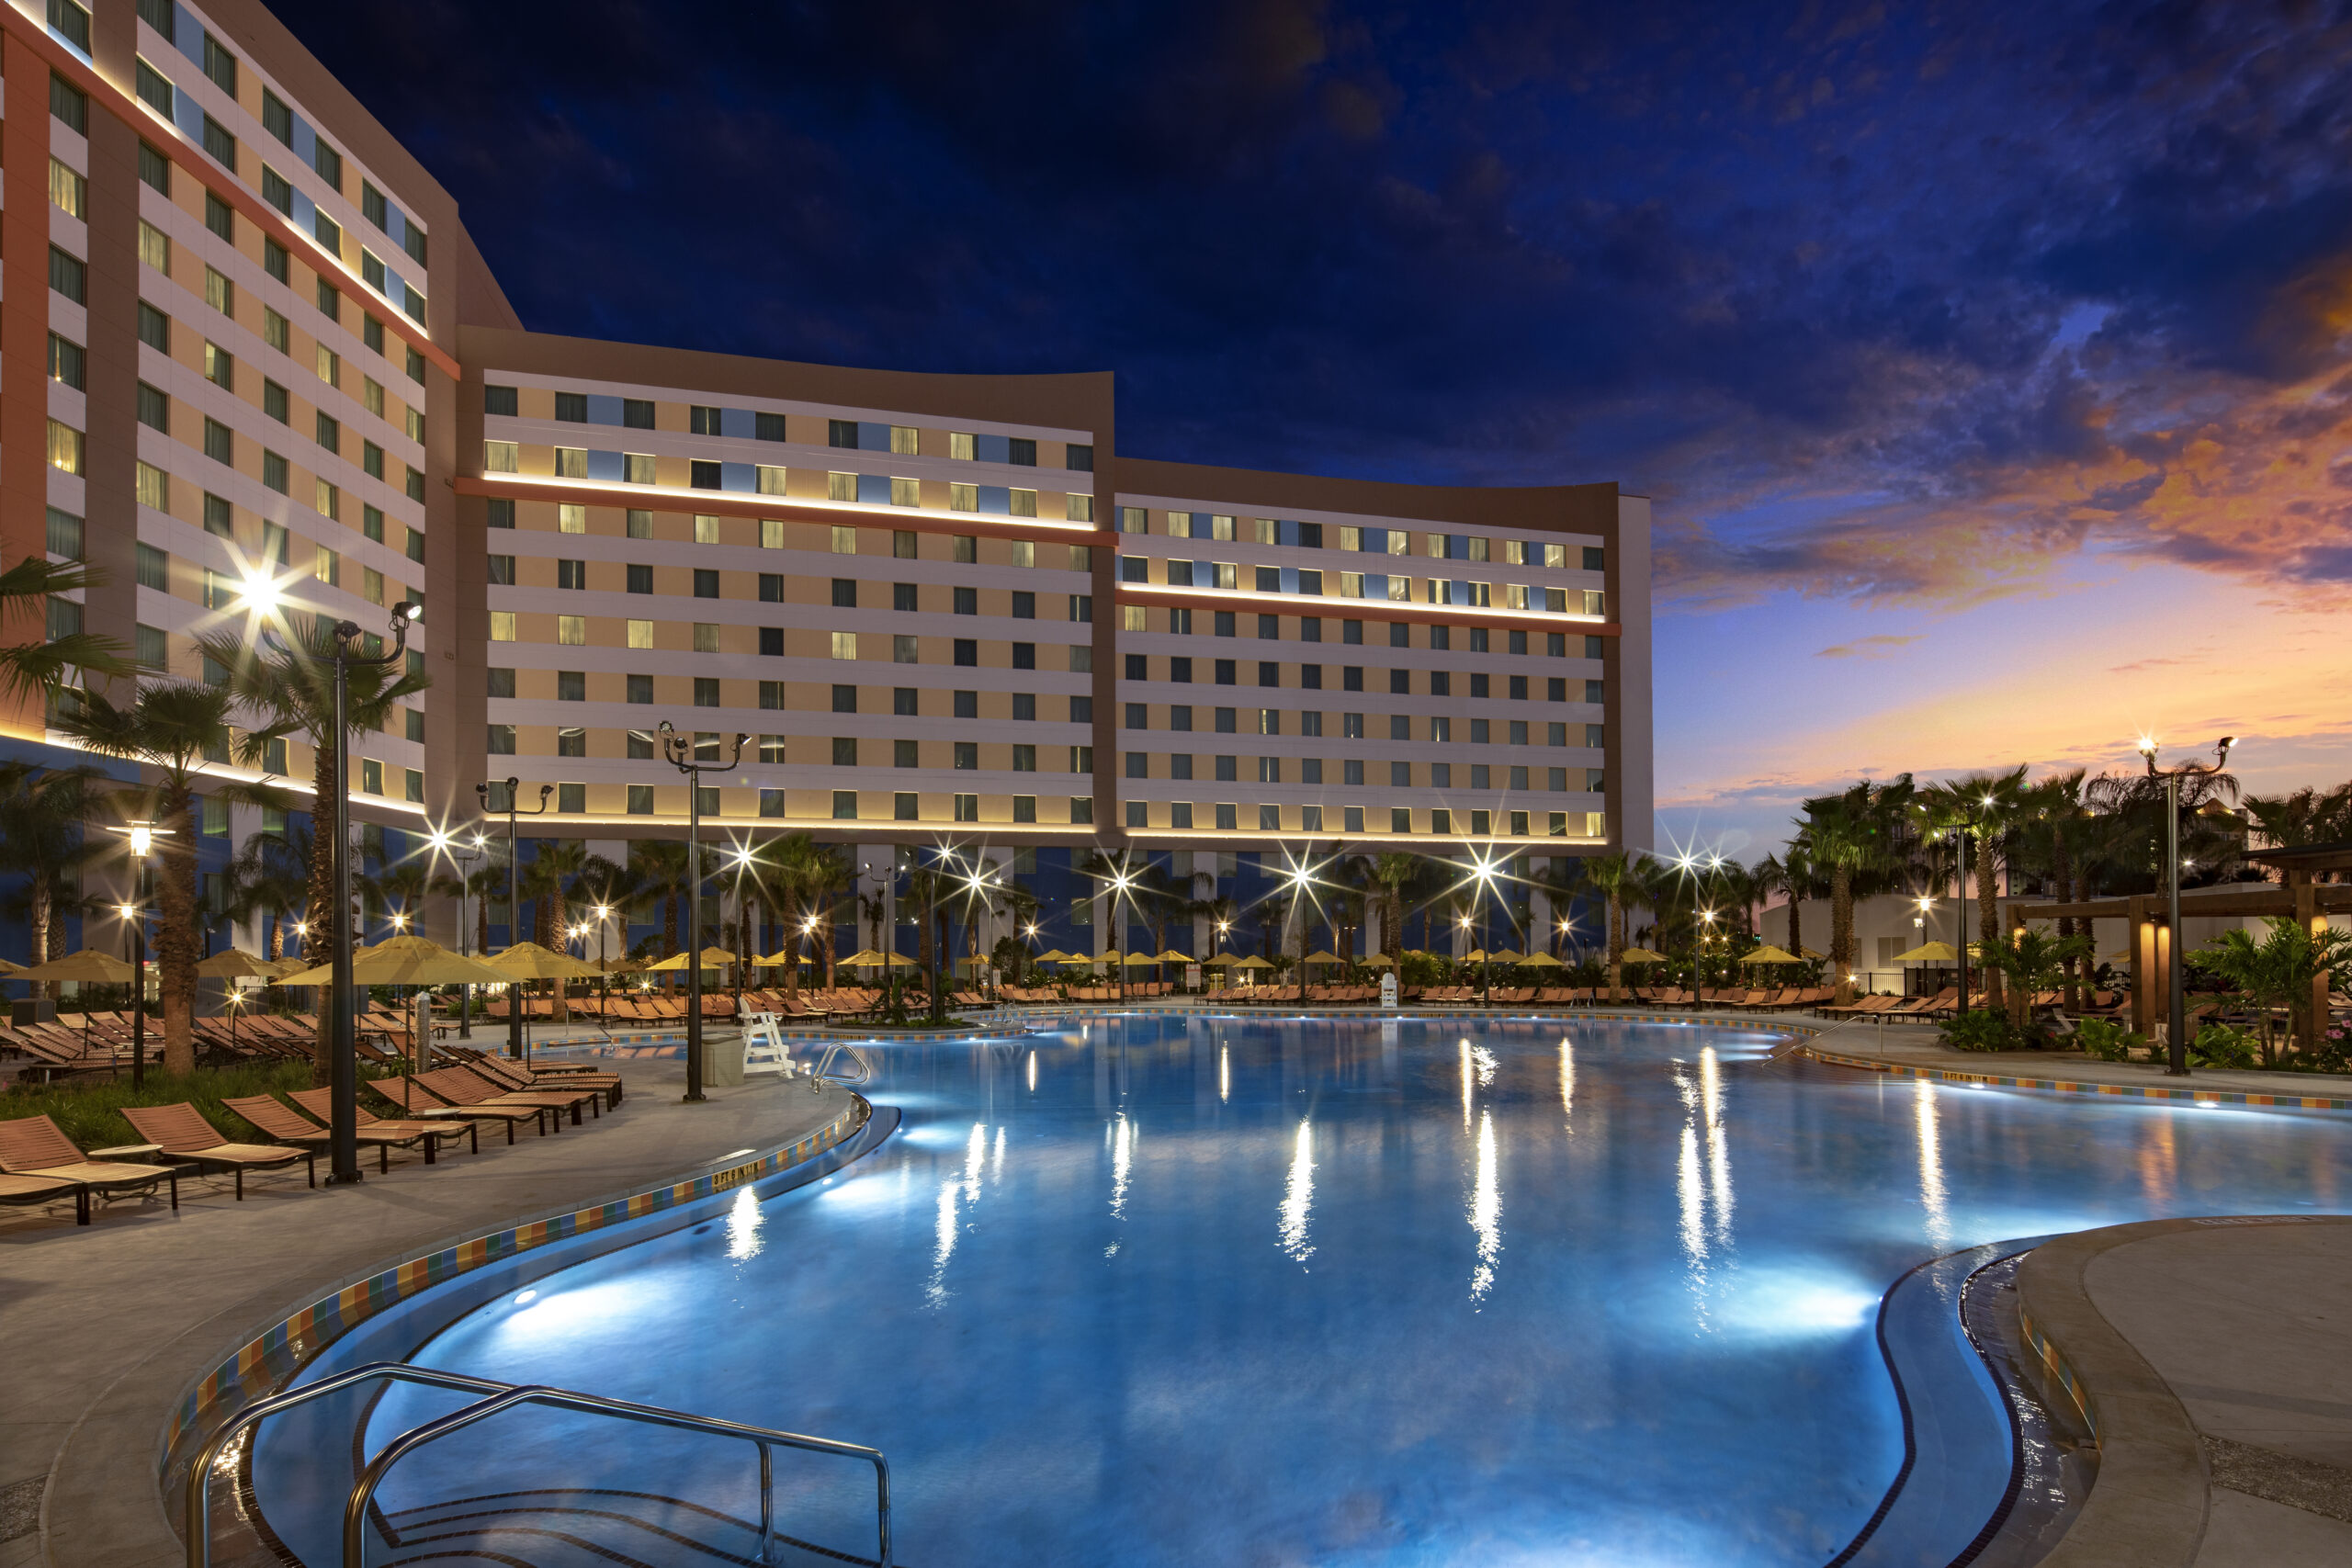 Universal Orlando Resort officially set to grand open Universal’s